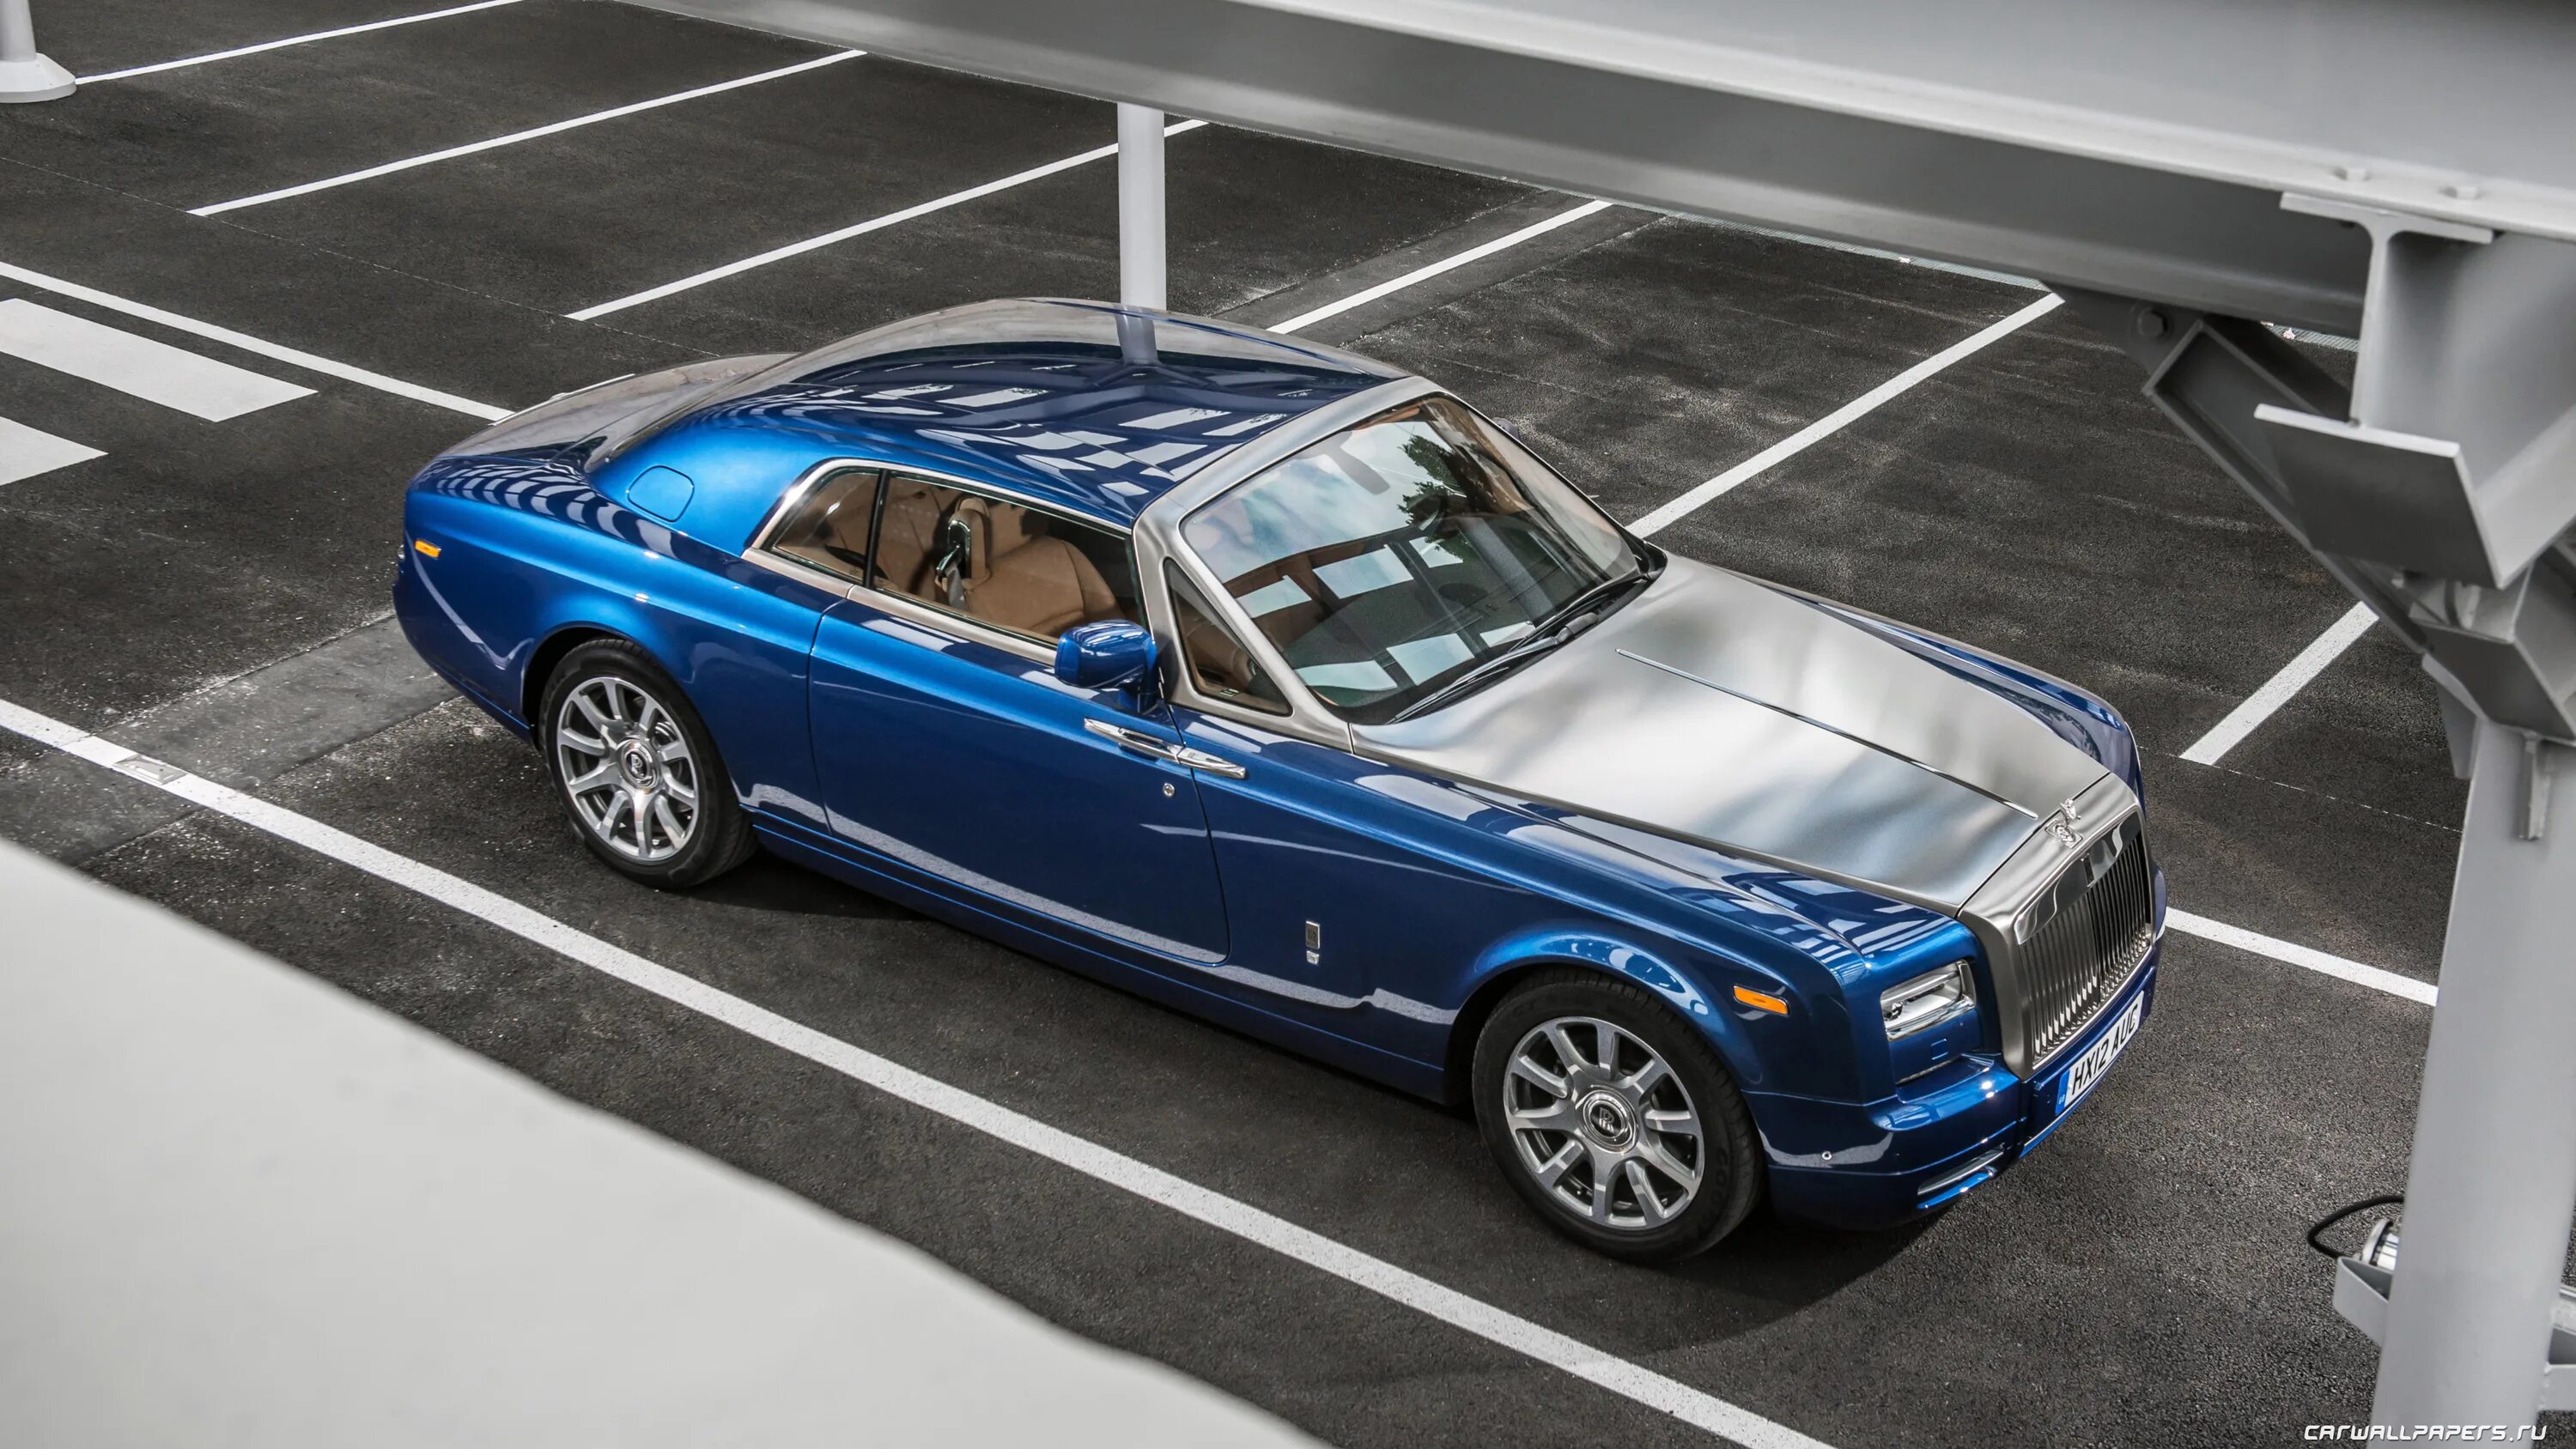 Роллс ройс купе. Rolls Royce Phantom купе. Rolls Royce Phantom Coupe 2020. Rolls Royce Phantom Coupe 2012. RR Phantom Coupe.